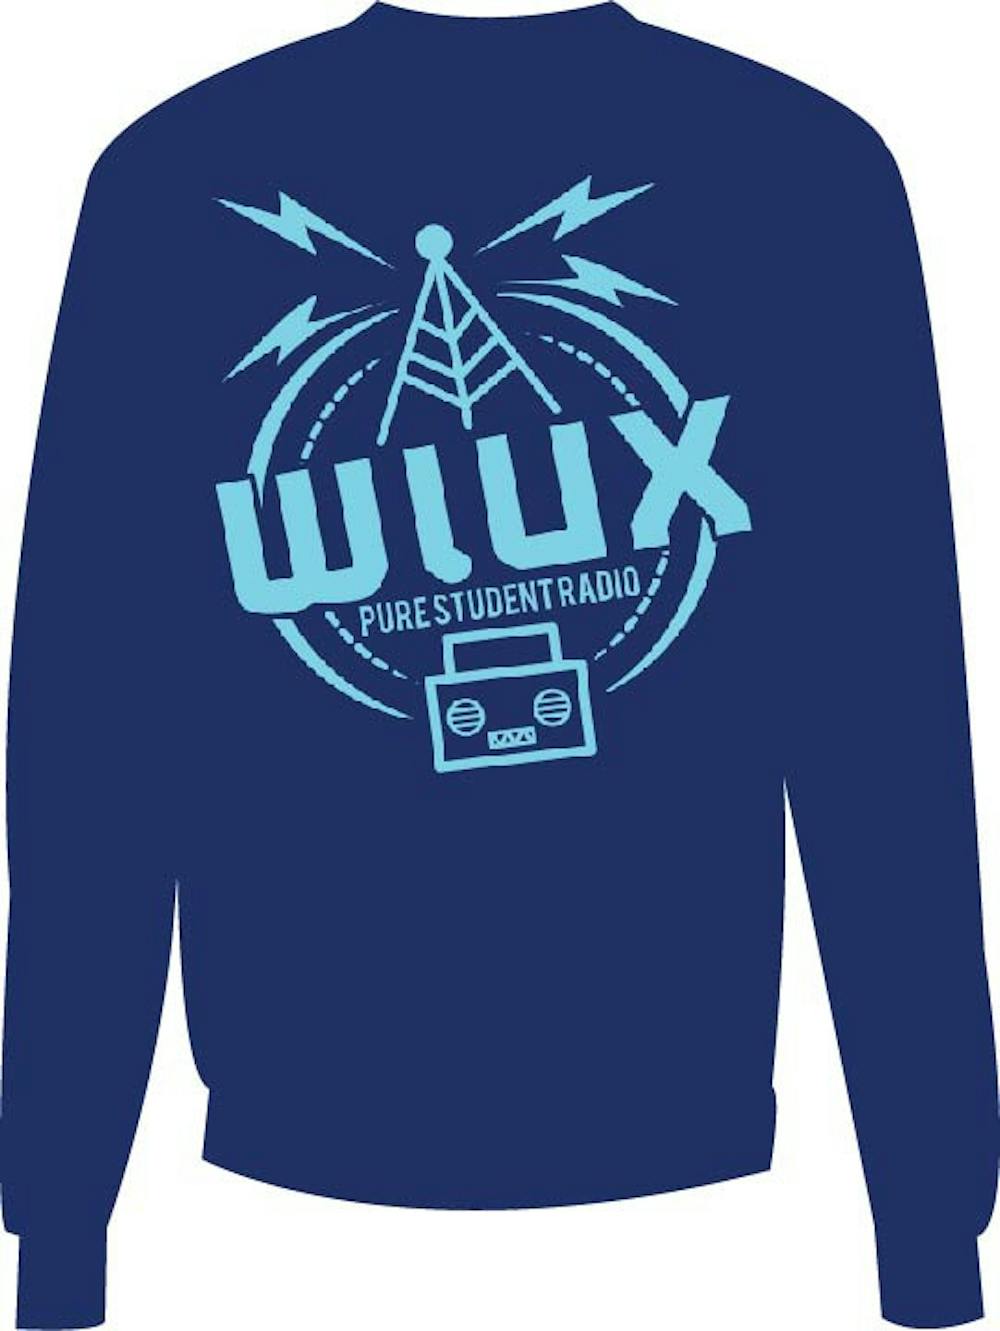 WIUX_Sweatshirt-1